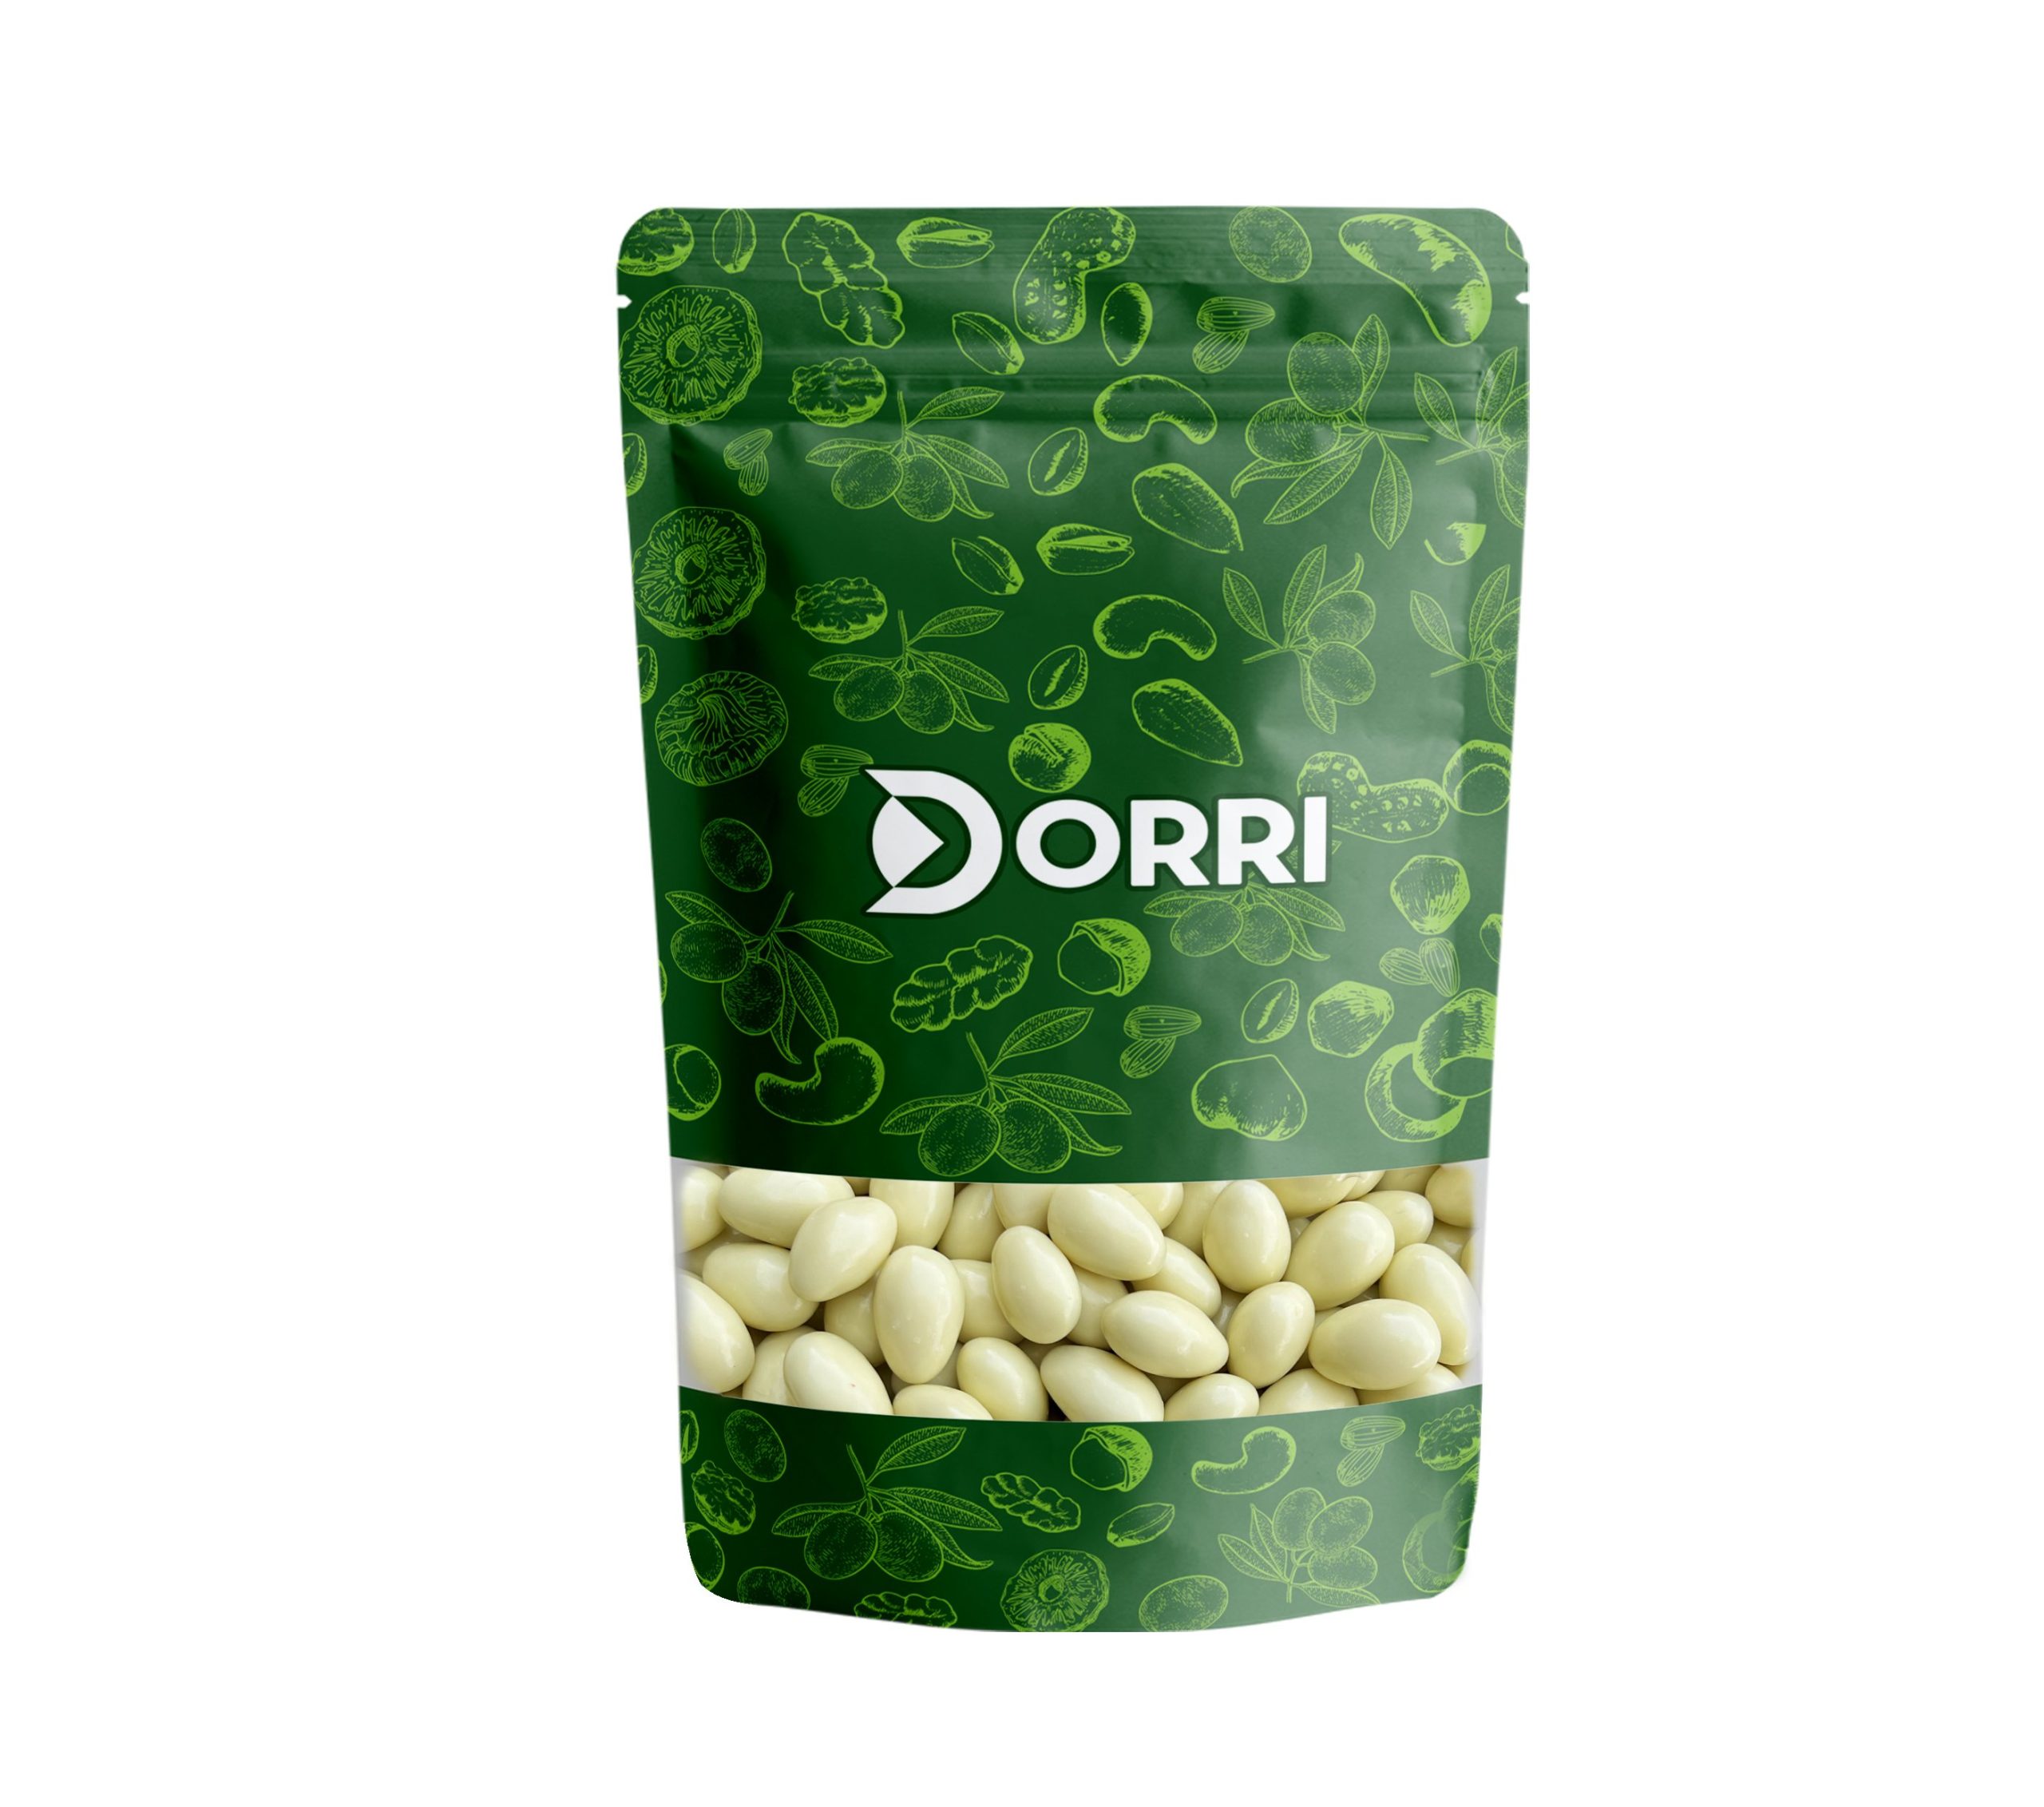 Dorri - White Chocolate Almonds